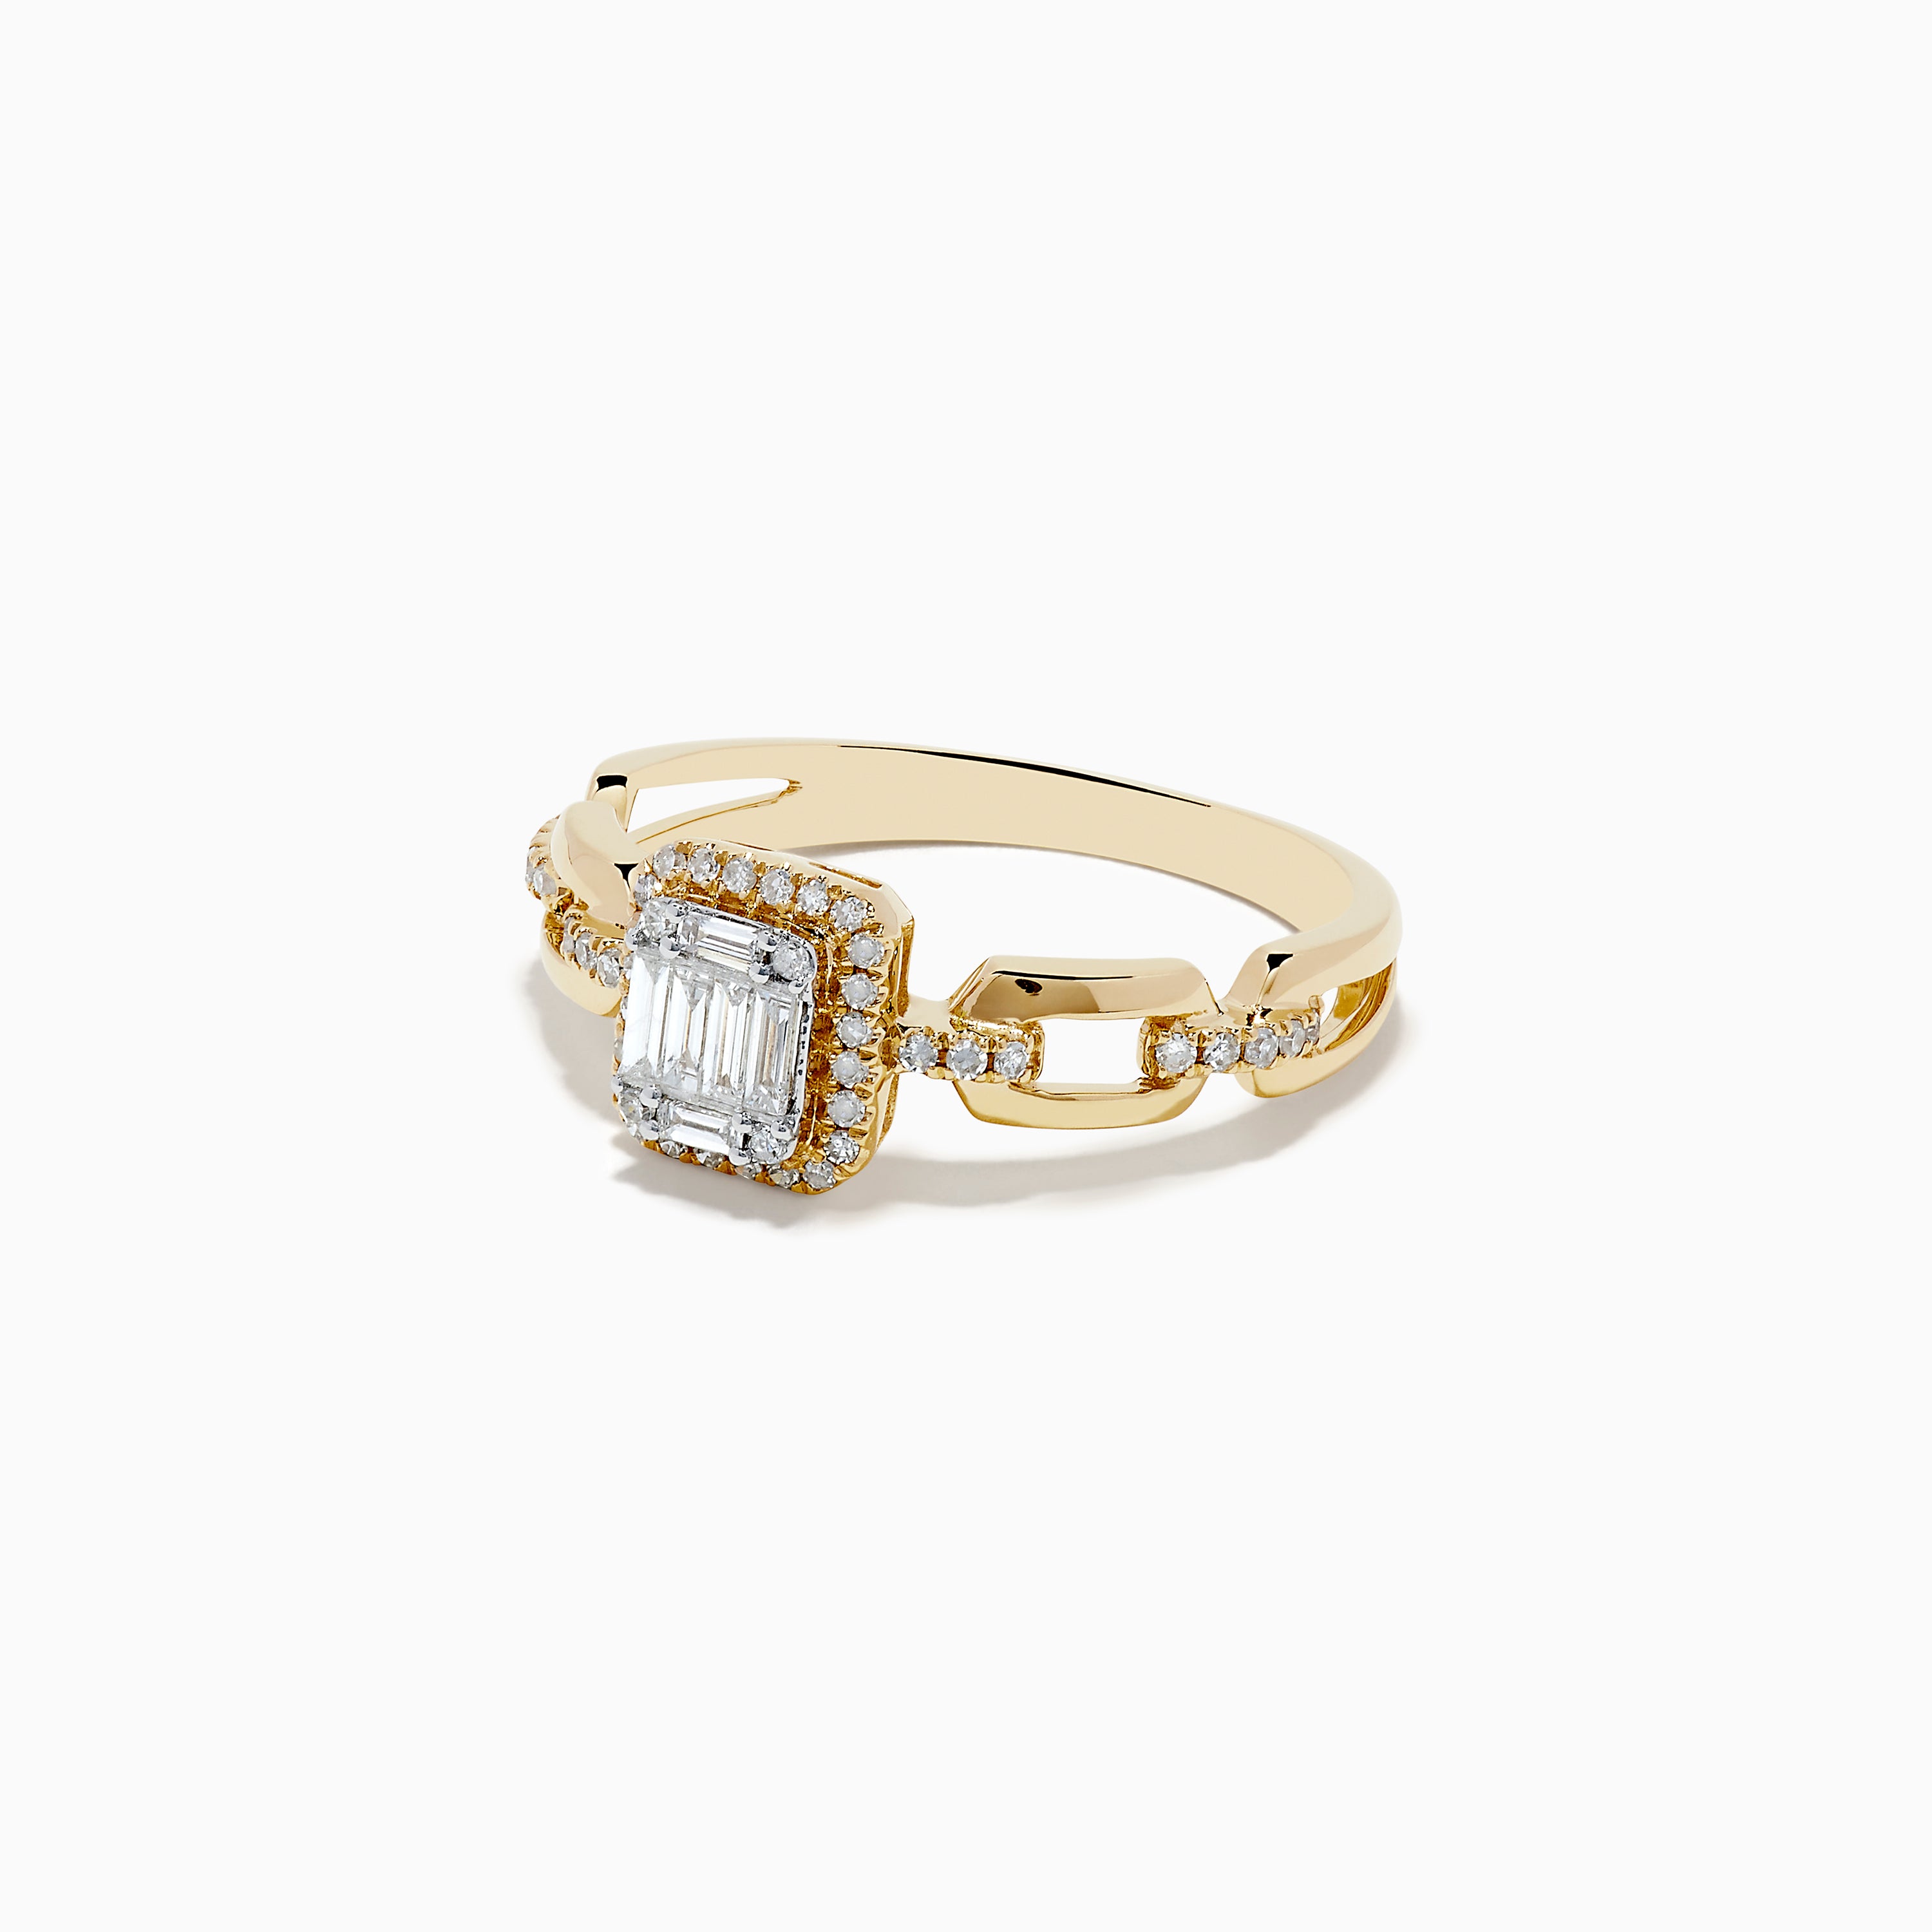 Effy D'oro 14K Yellow Gold Diamond Ring